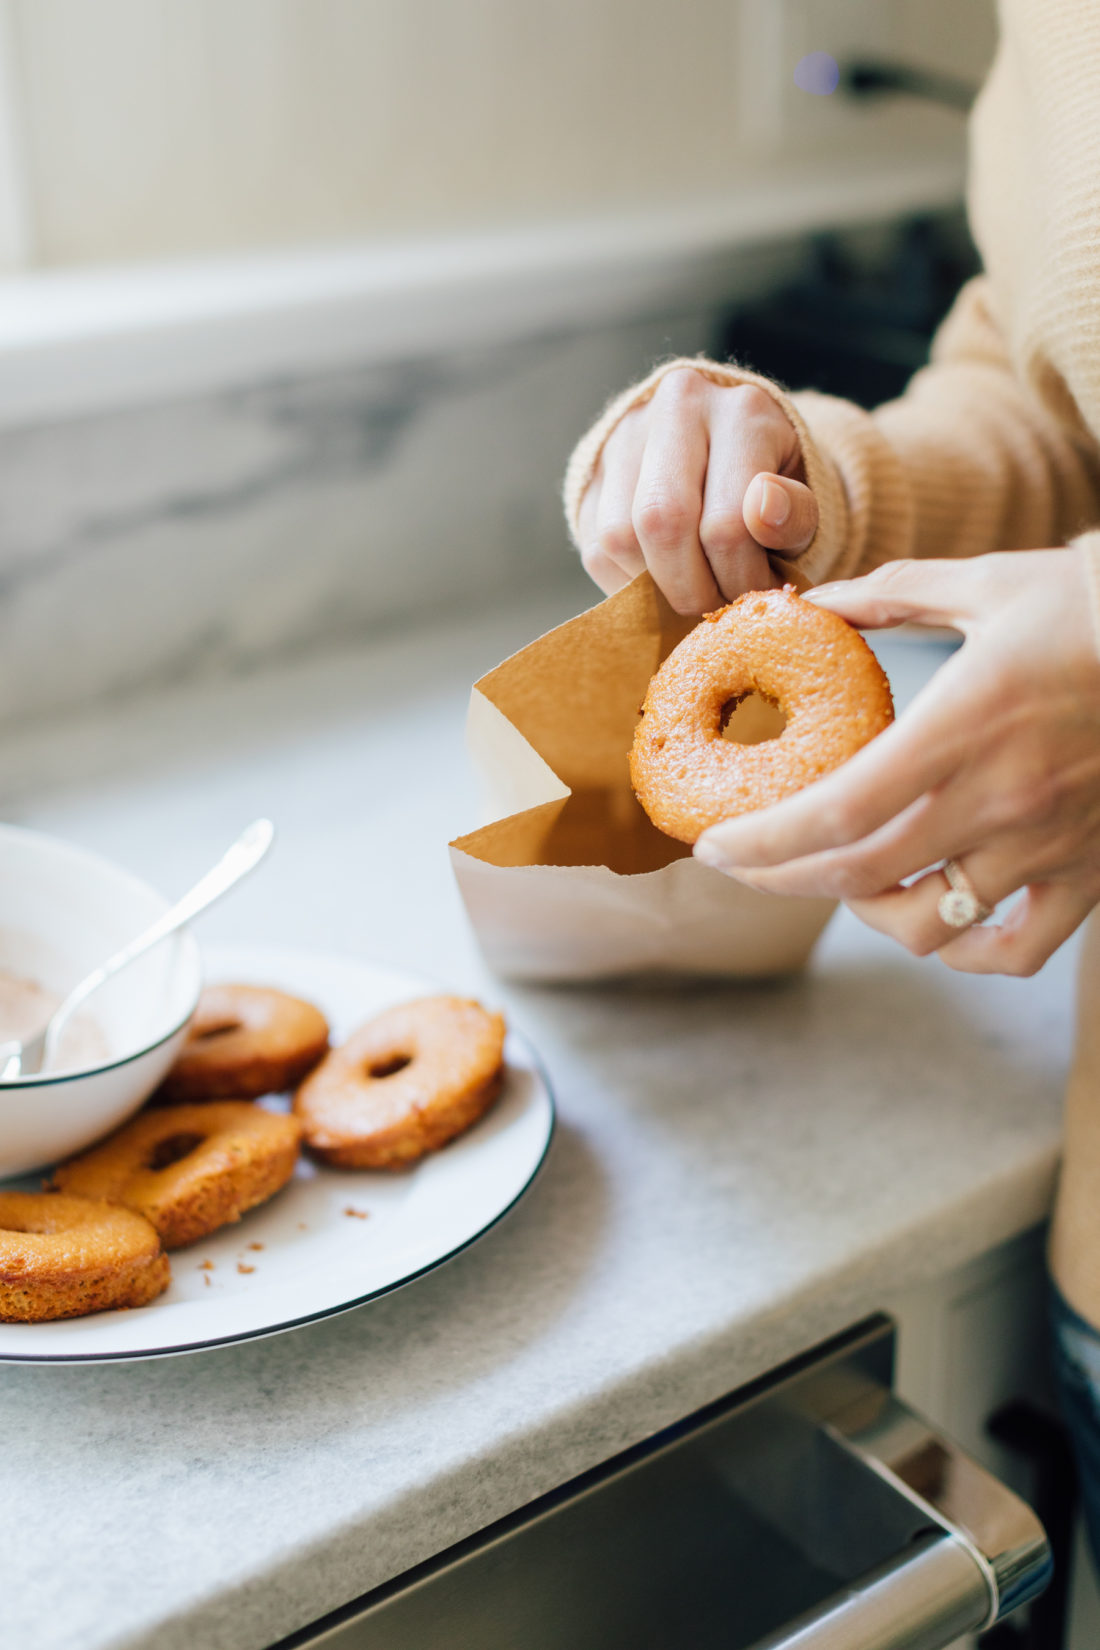 Eva Amurri Martino places a baked apple cider donut inside a brown paper bag